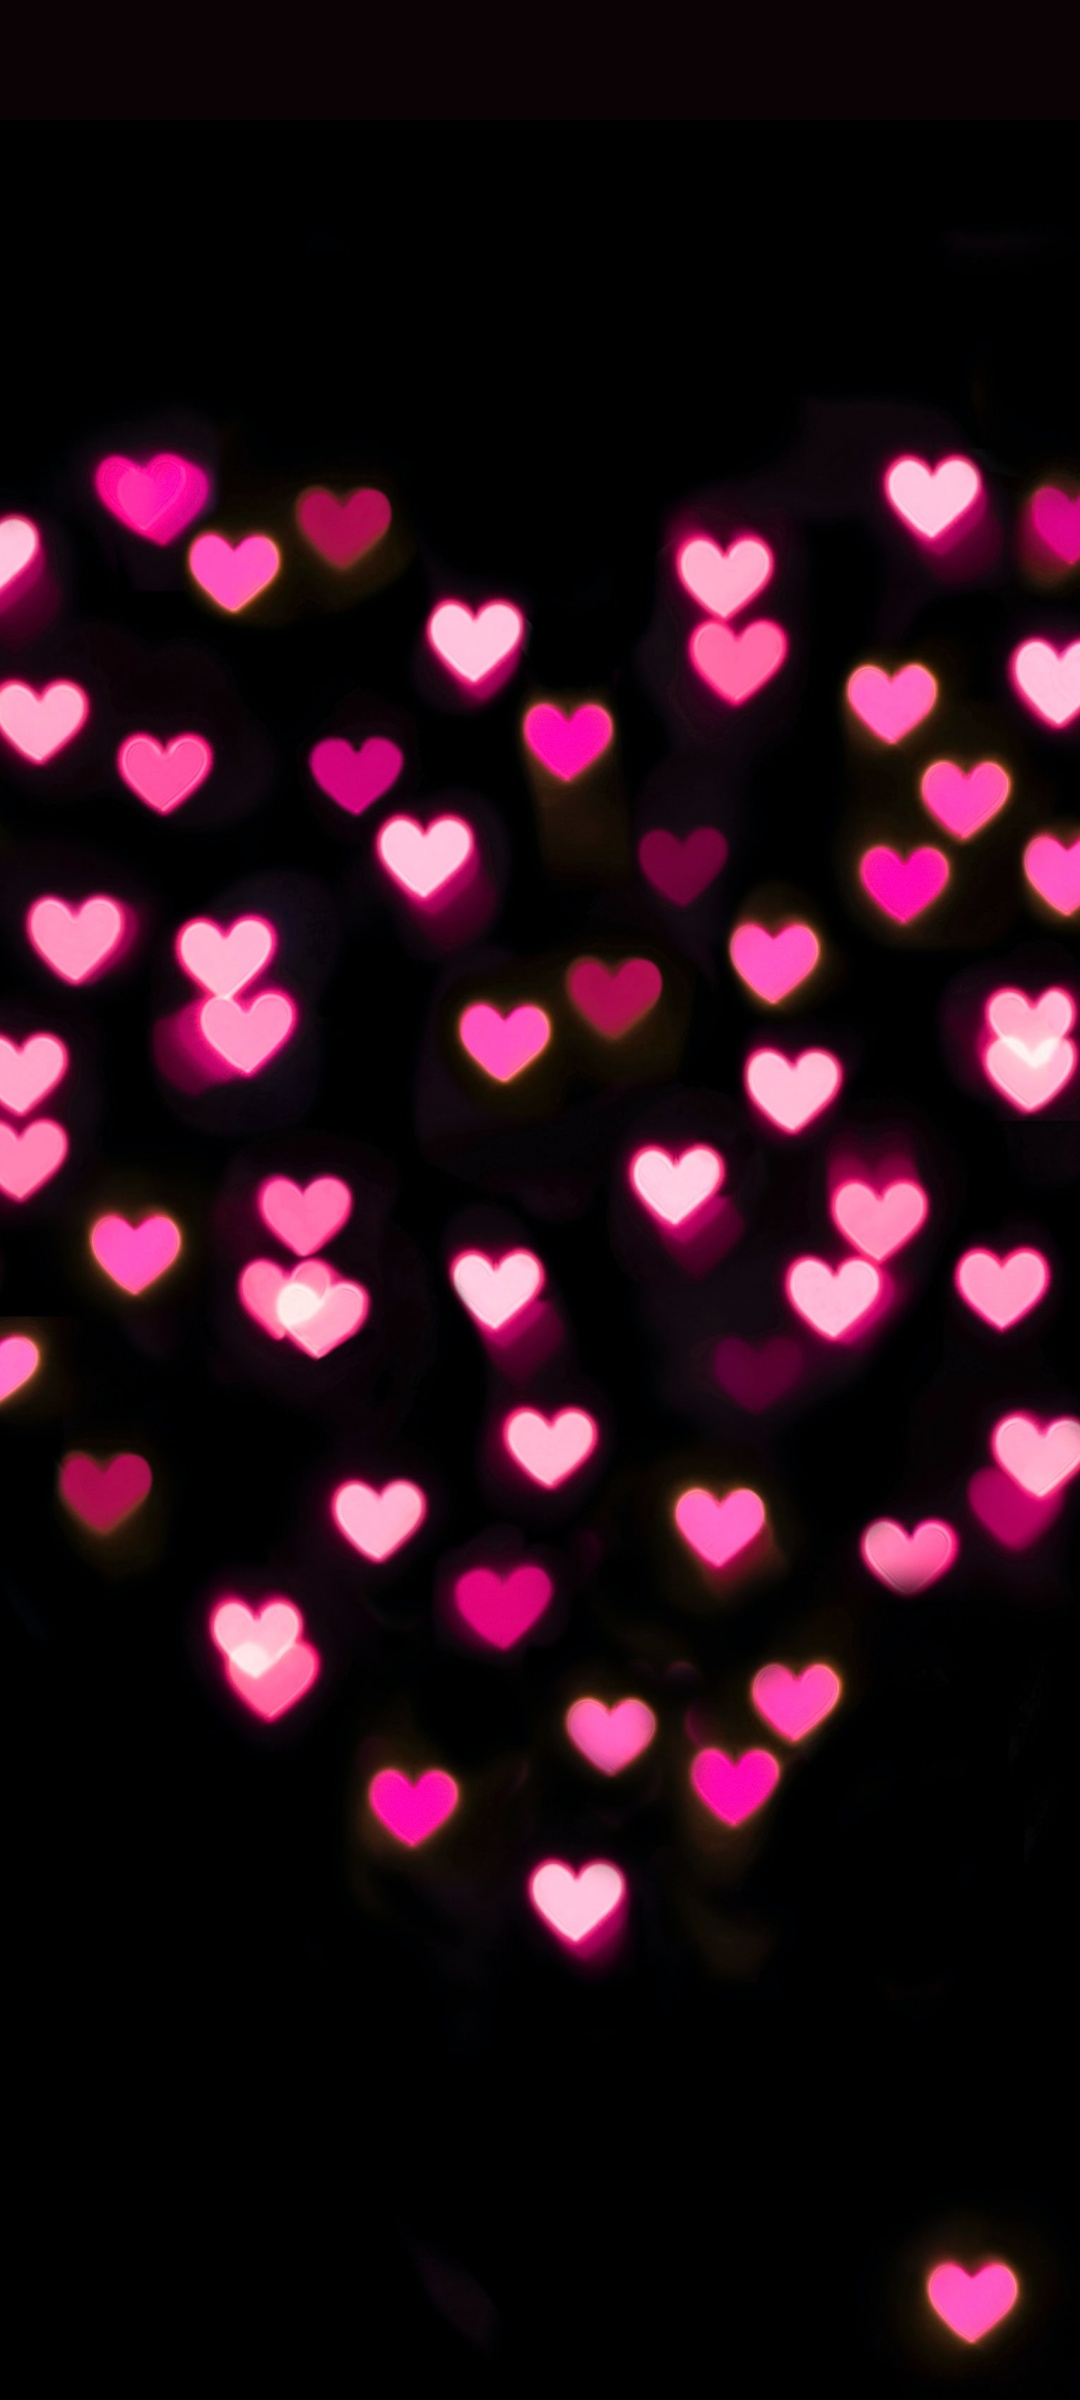 Pink hearts 4K Wallpaper, Black background, Bokeh, Glowing lights